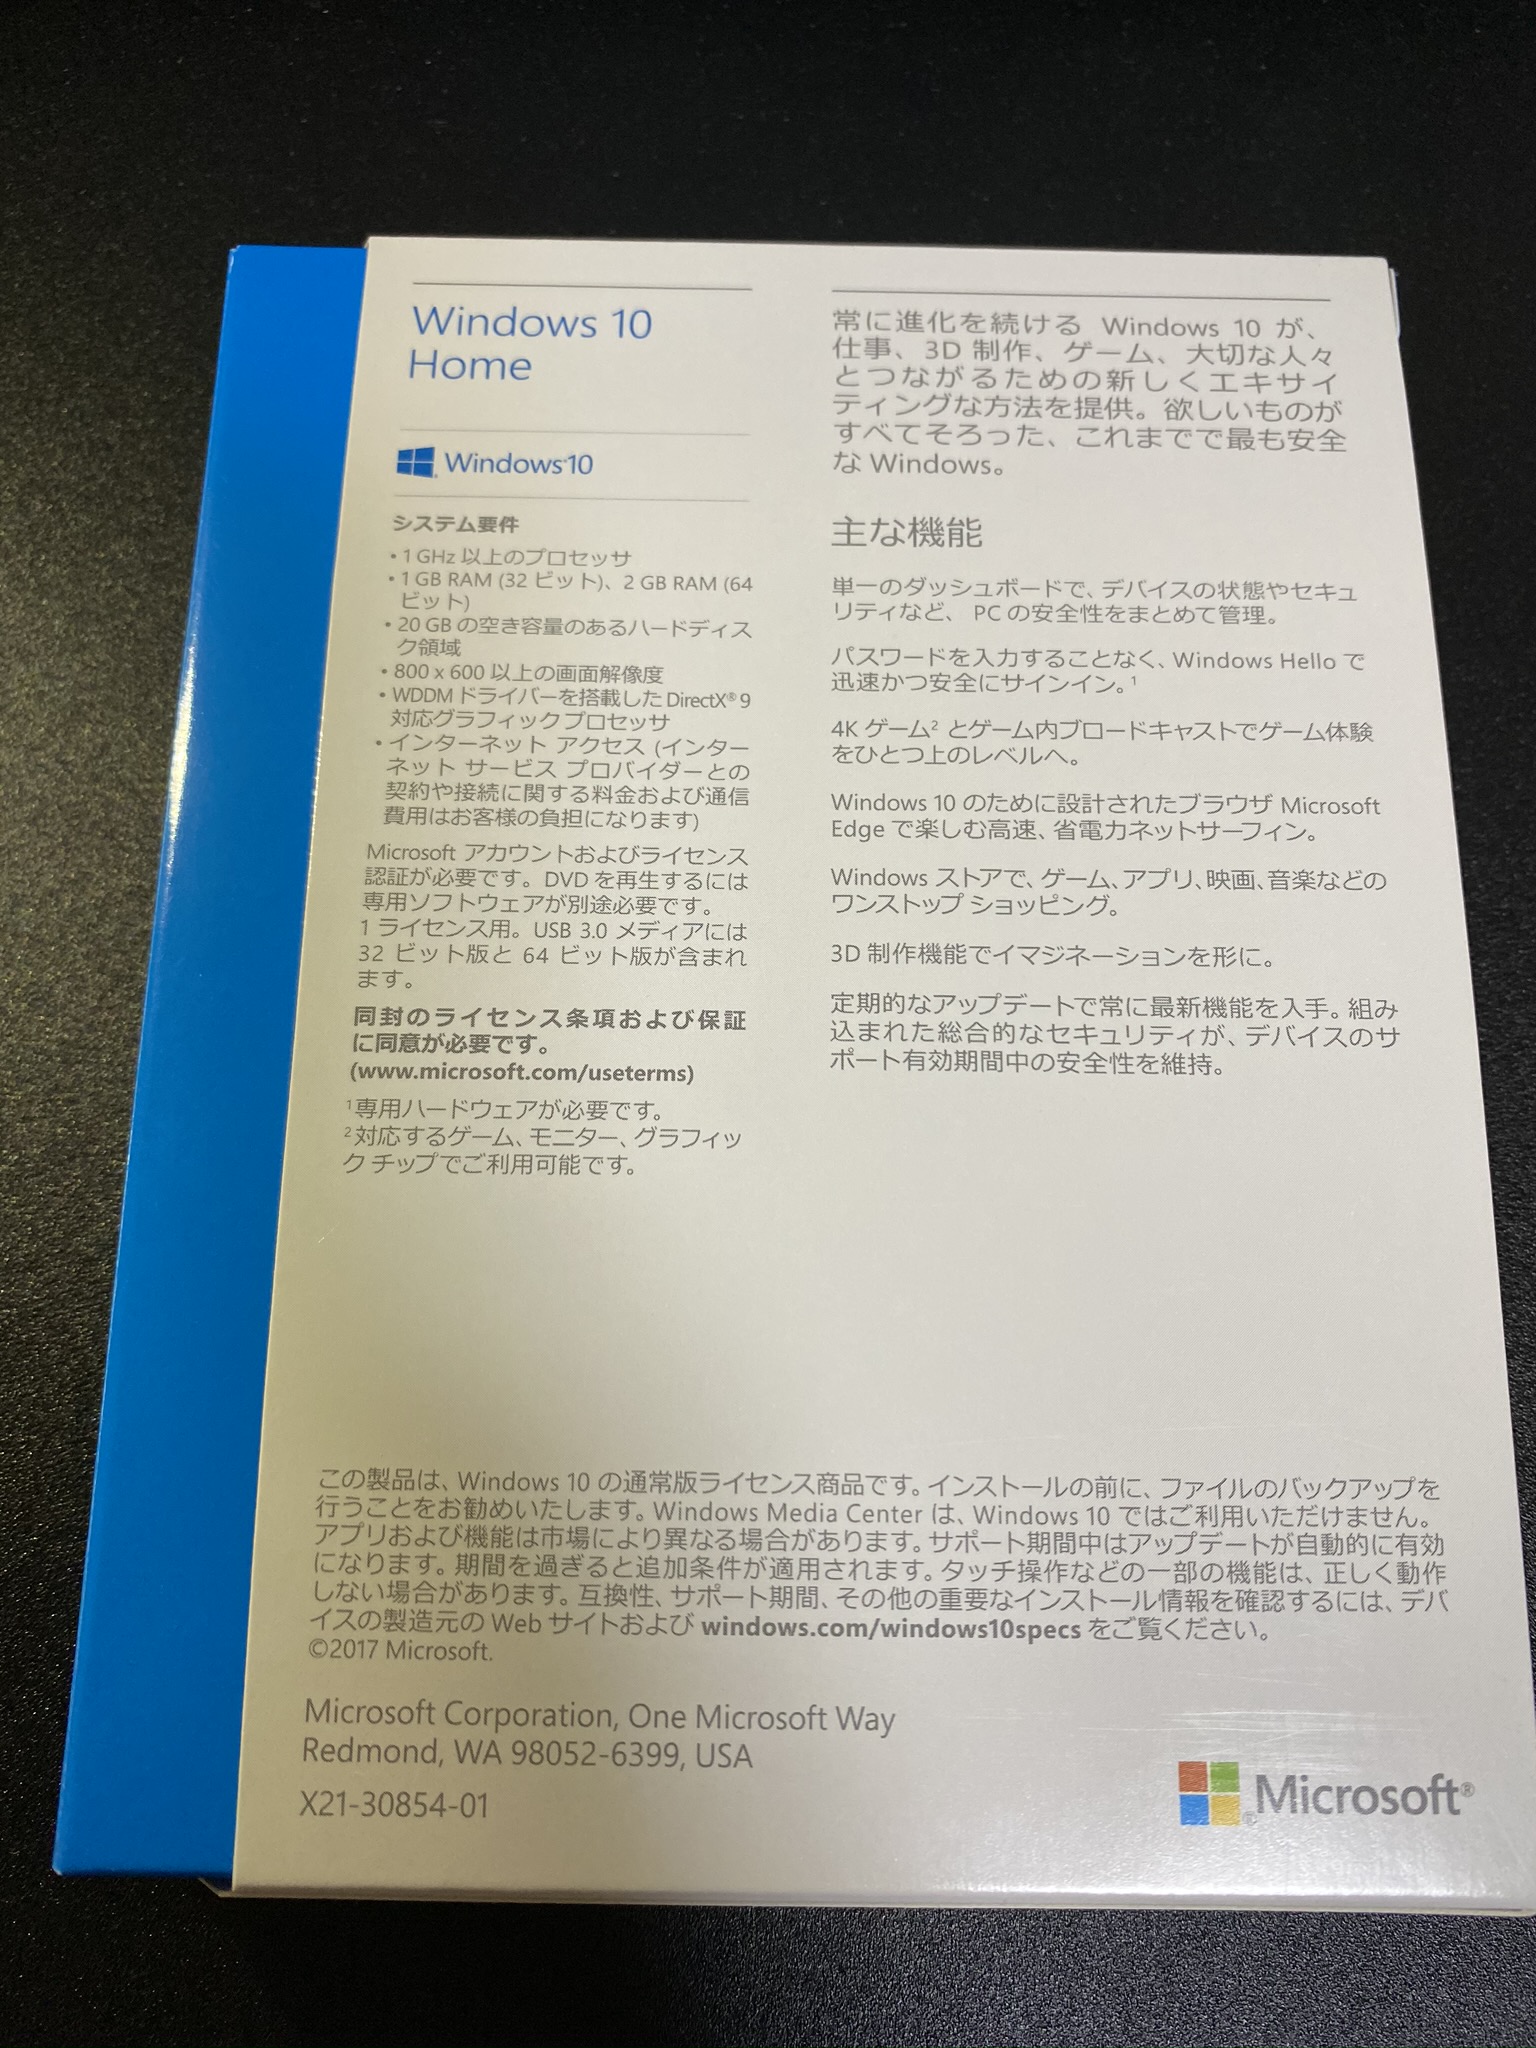 Windows10 home プロダクトキー 32bit 64bit 1PC win10 Microsoft windows 10 Home プロダクトキーのみ 日本語版 ダウンロード版 認証完了までサポート